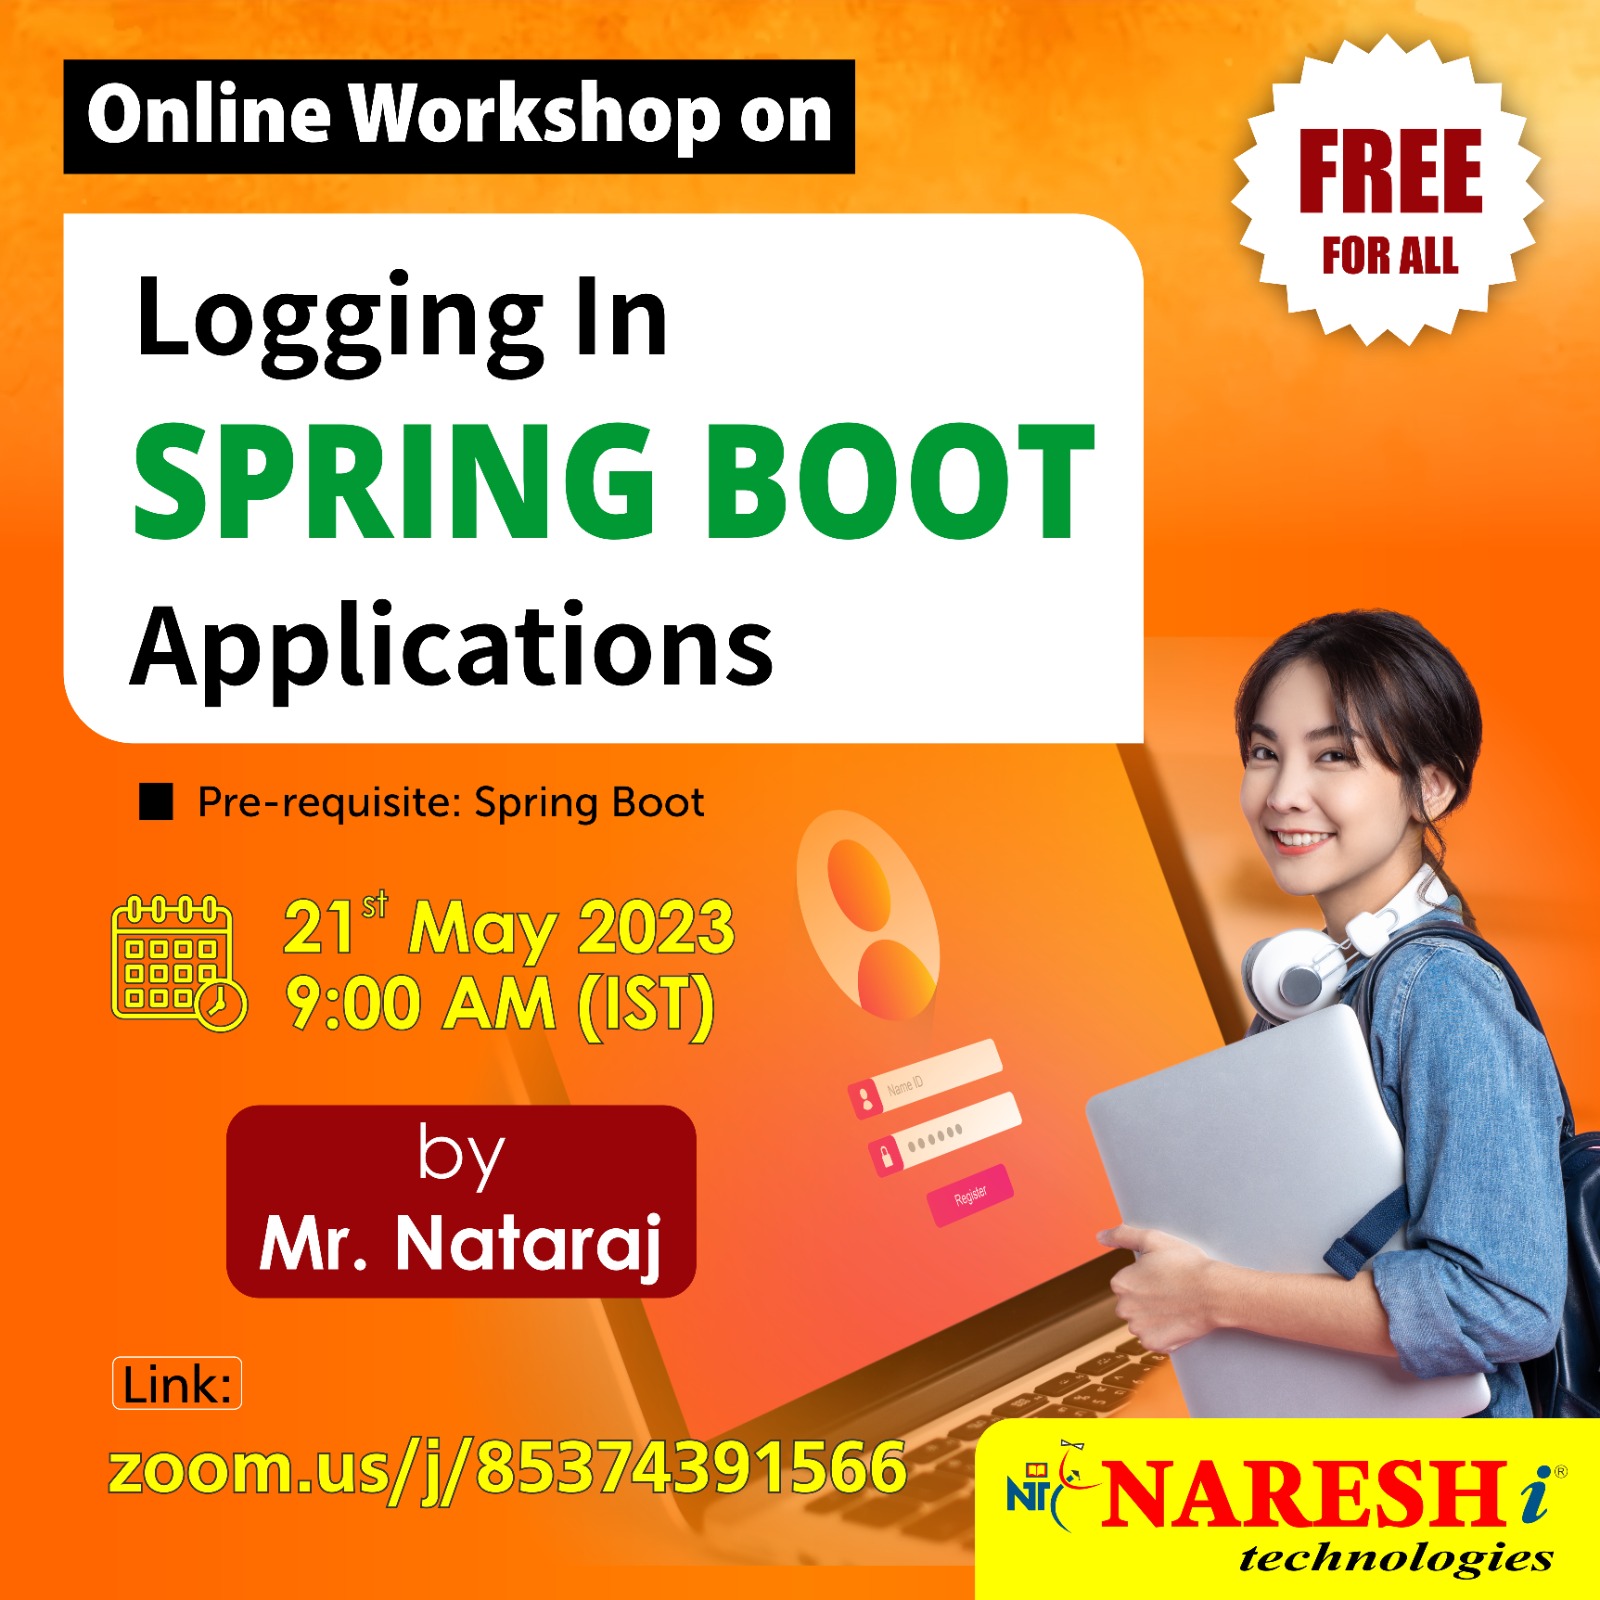 Free Online Workshop On Logging in spring boot applications by Mr. Nataraj., Online Event